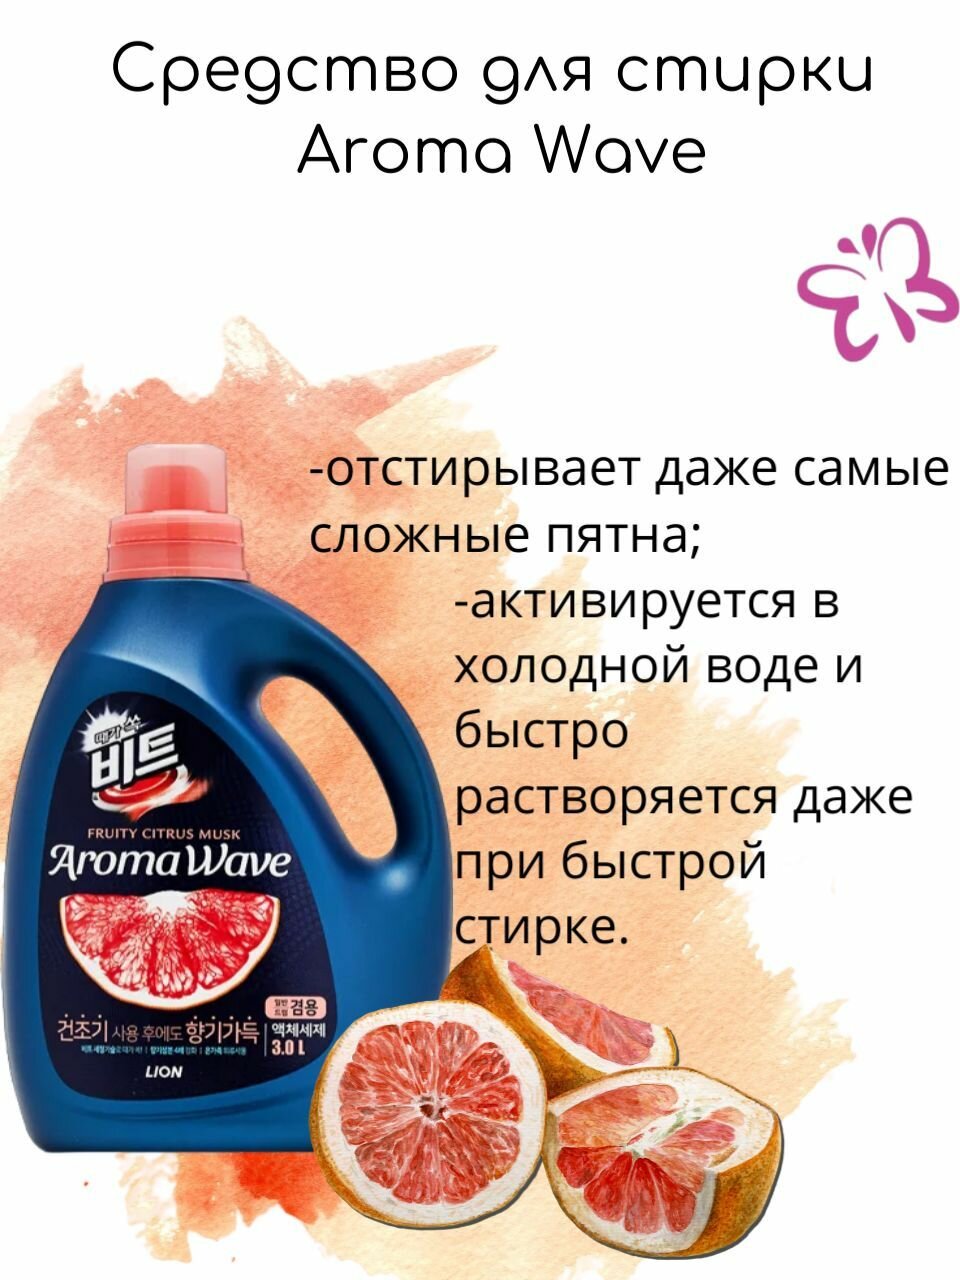 Lion Средство для стирки концентрированное жидкое Aroma Wave грейпфрут, 3л